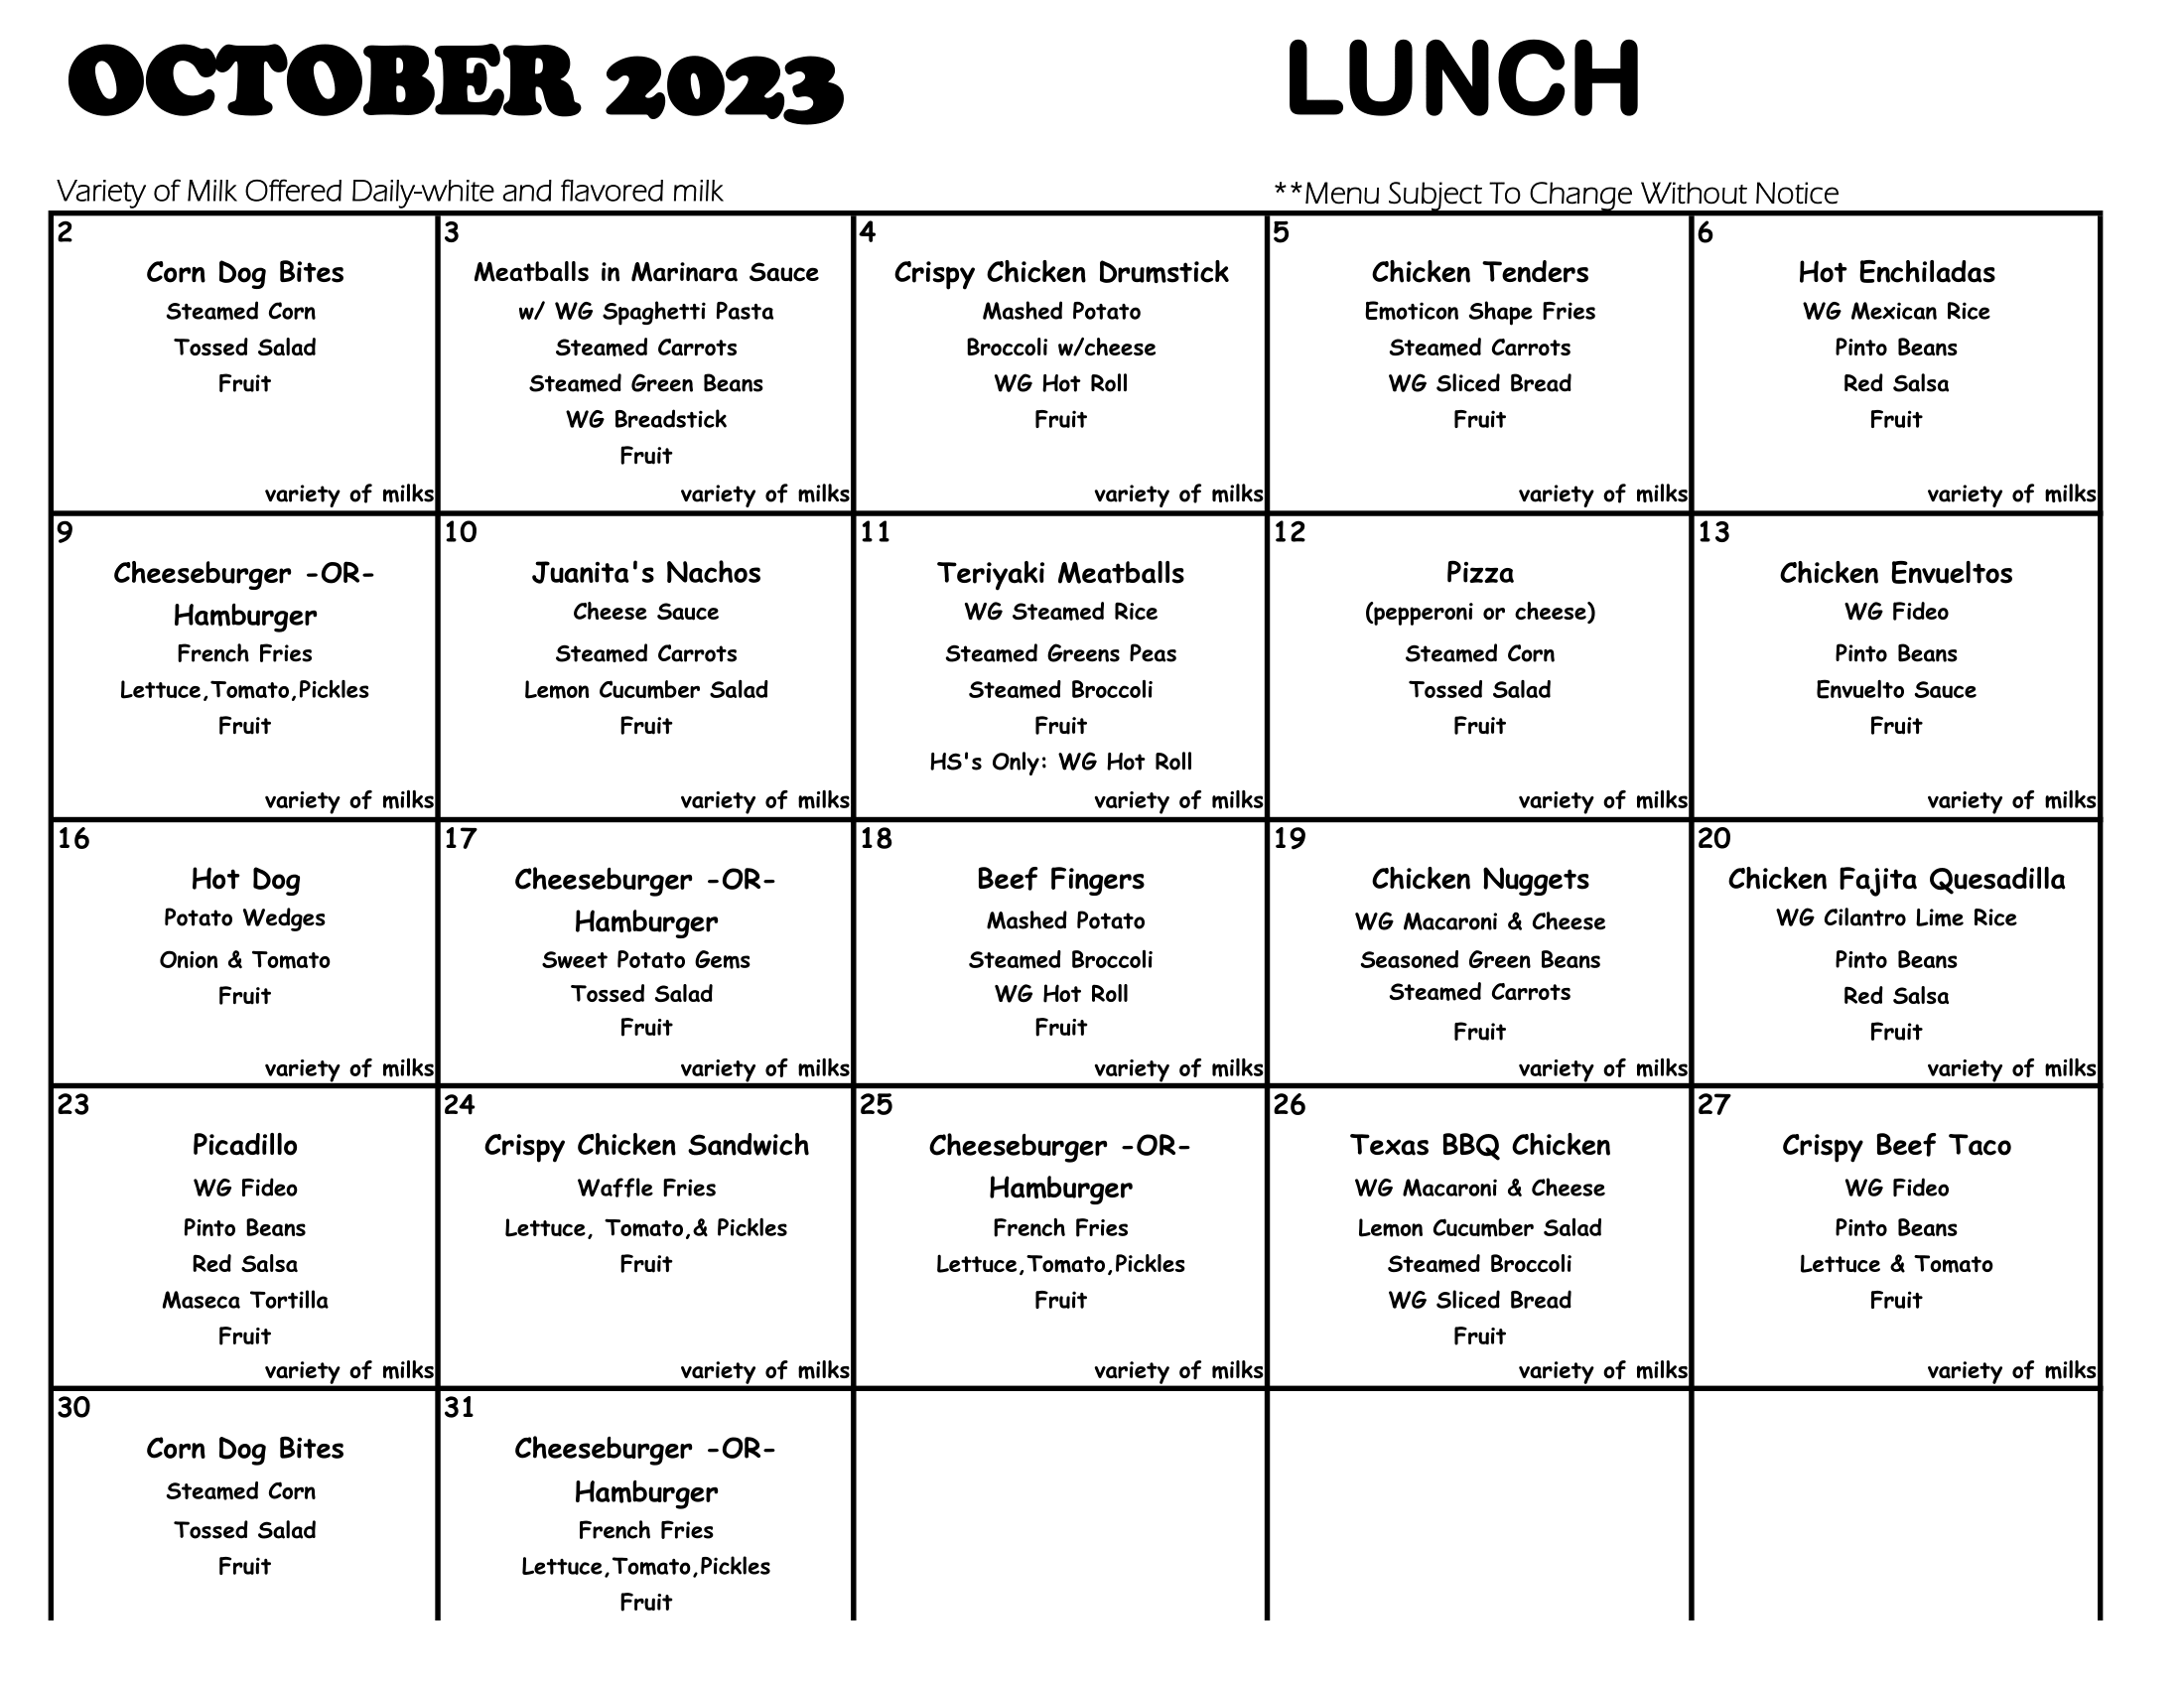 October 2023 lunch menus